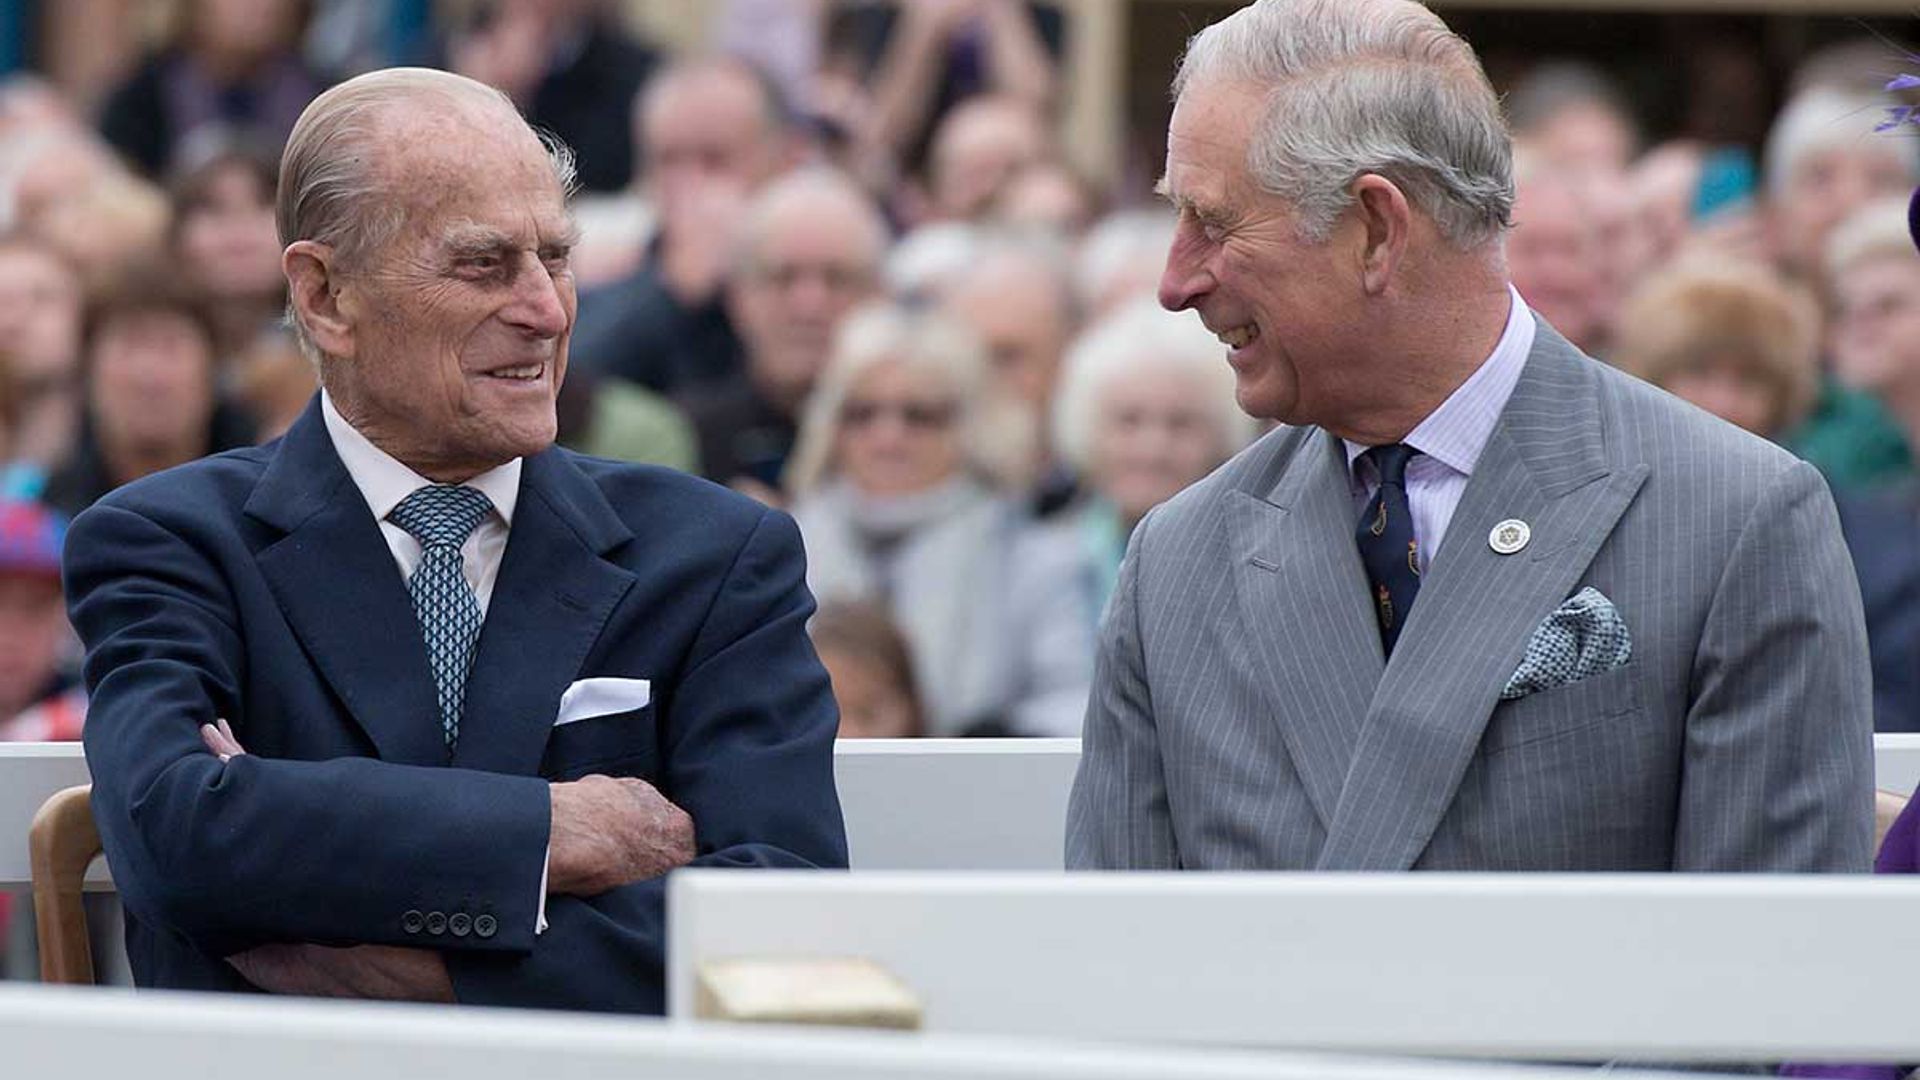 Prince Charles visits Prince Philip at Sandringham after royal tour